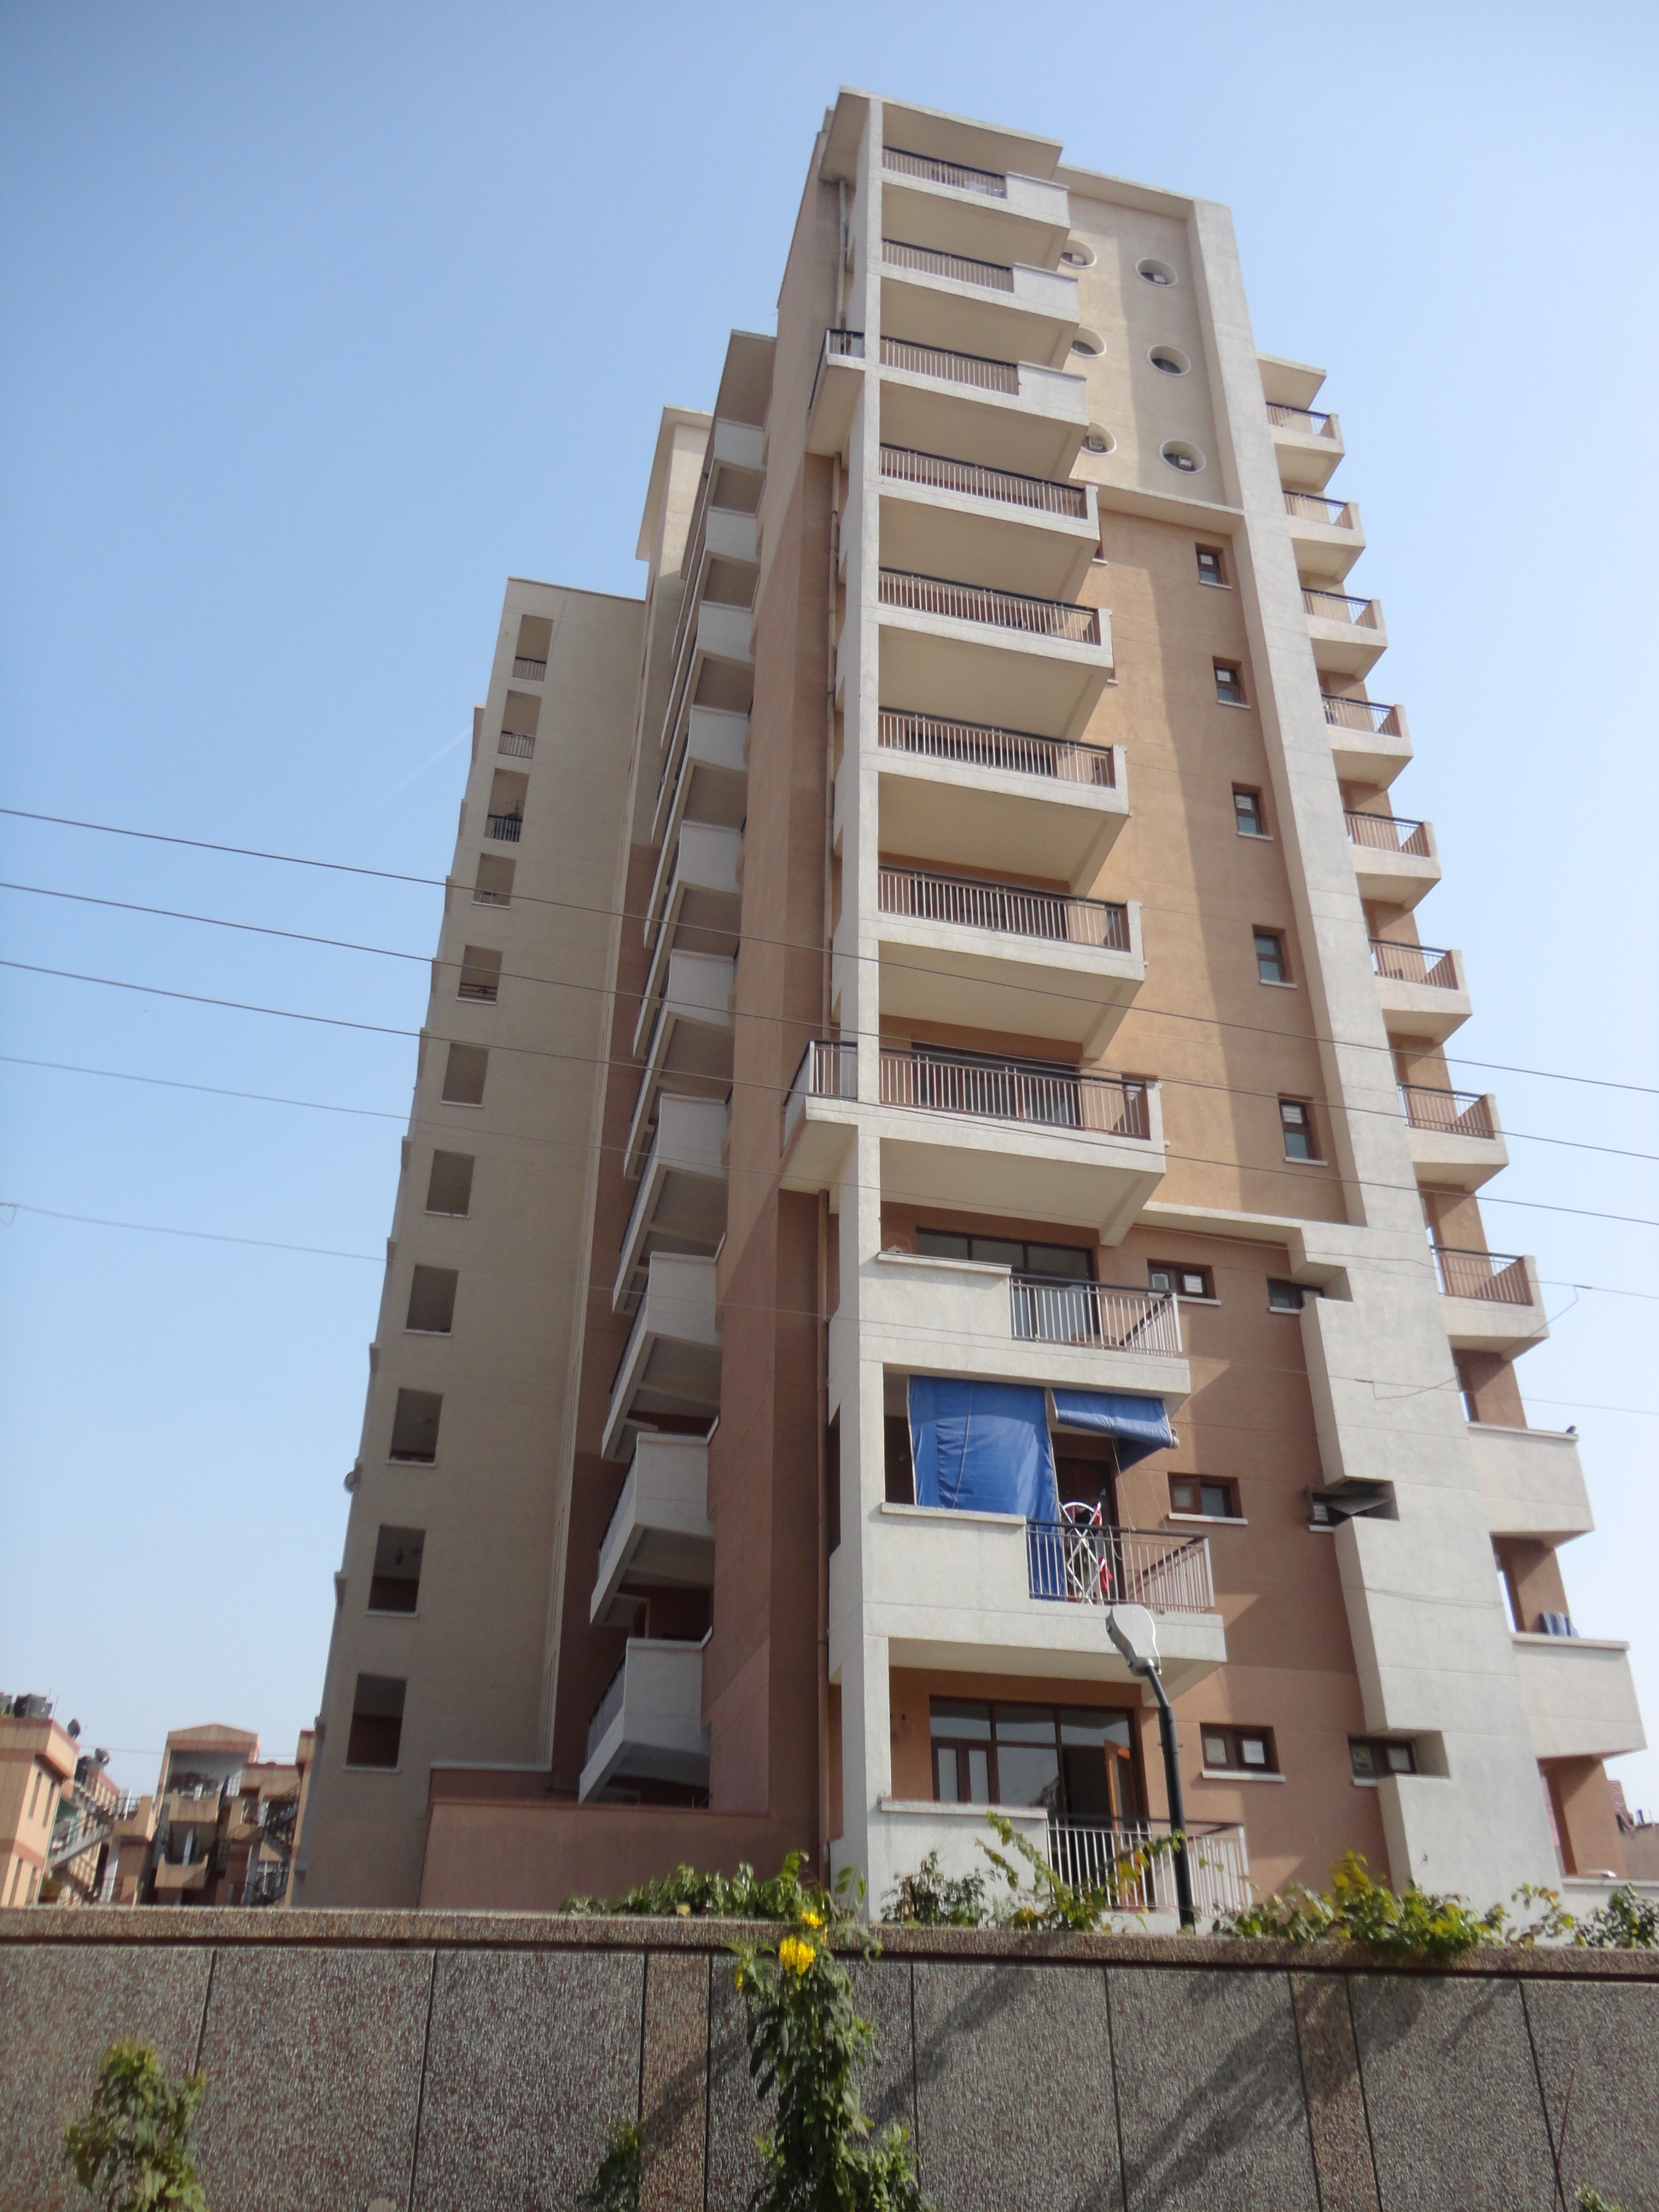 Navketan Apartments Project Deails